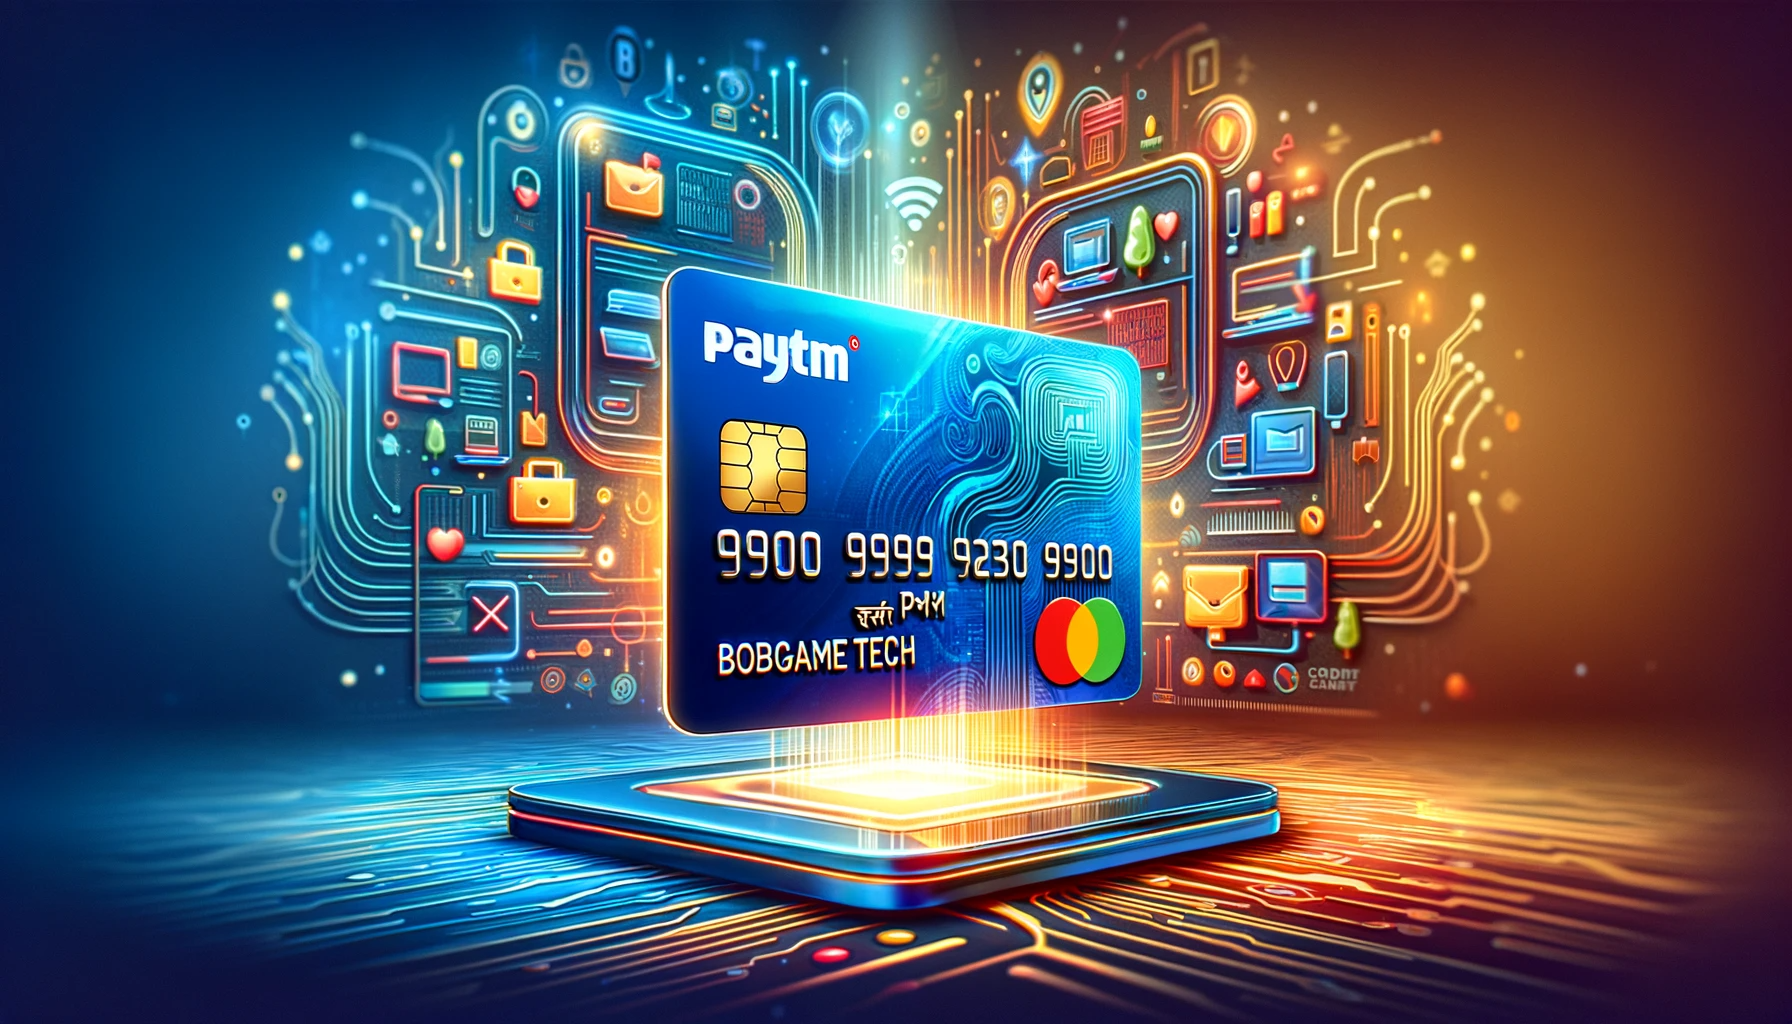 bobgametech.com Paytm Credit Card